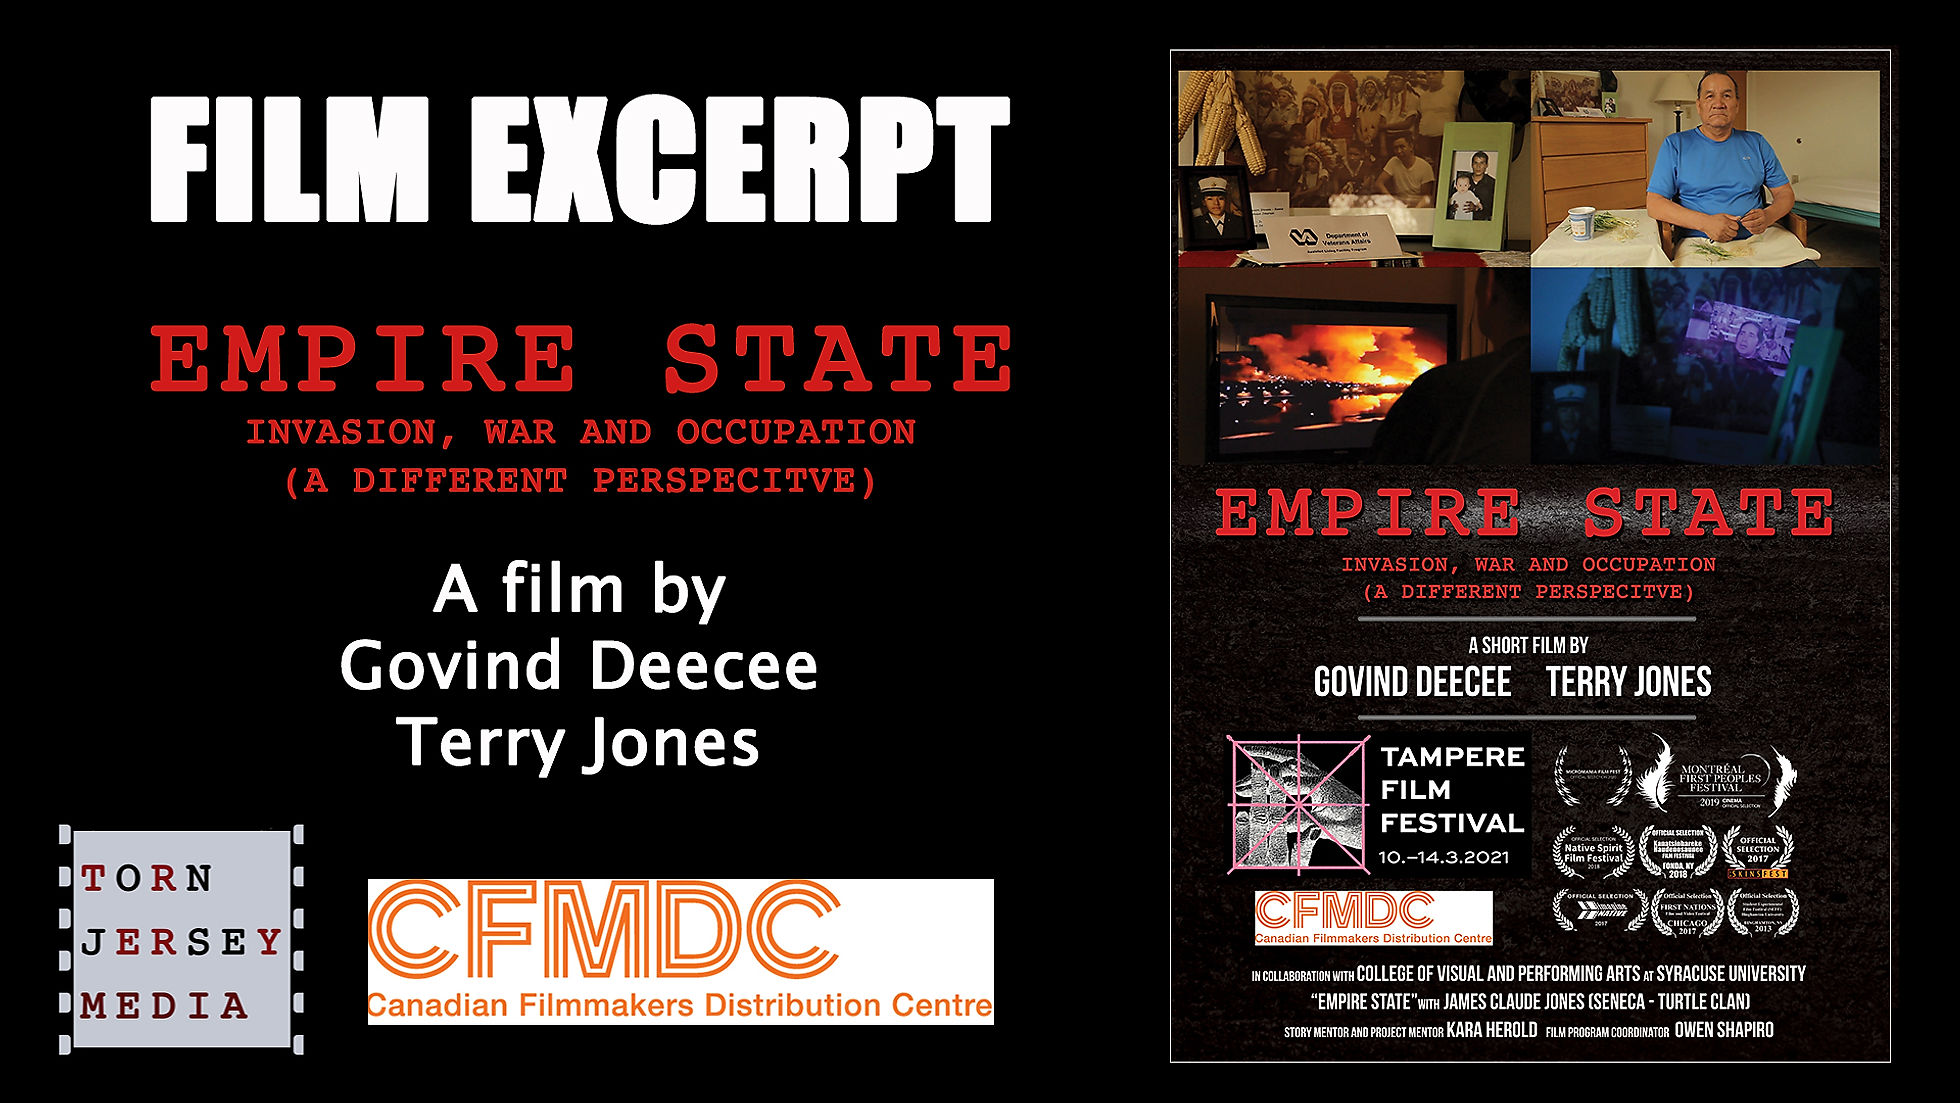 Empire State - Film Excerpt